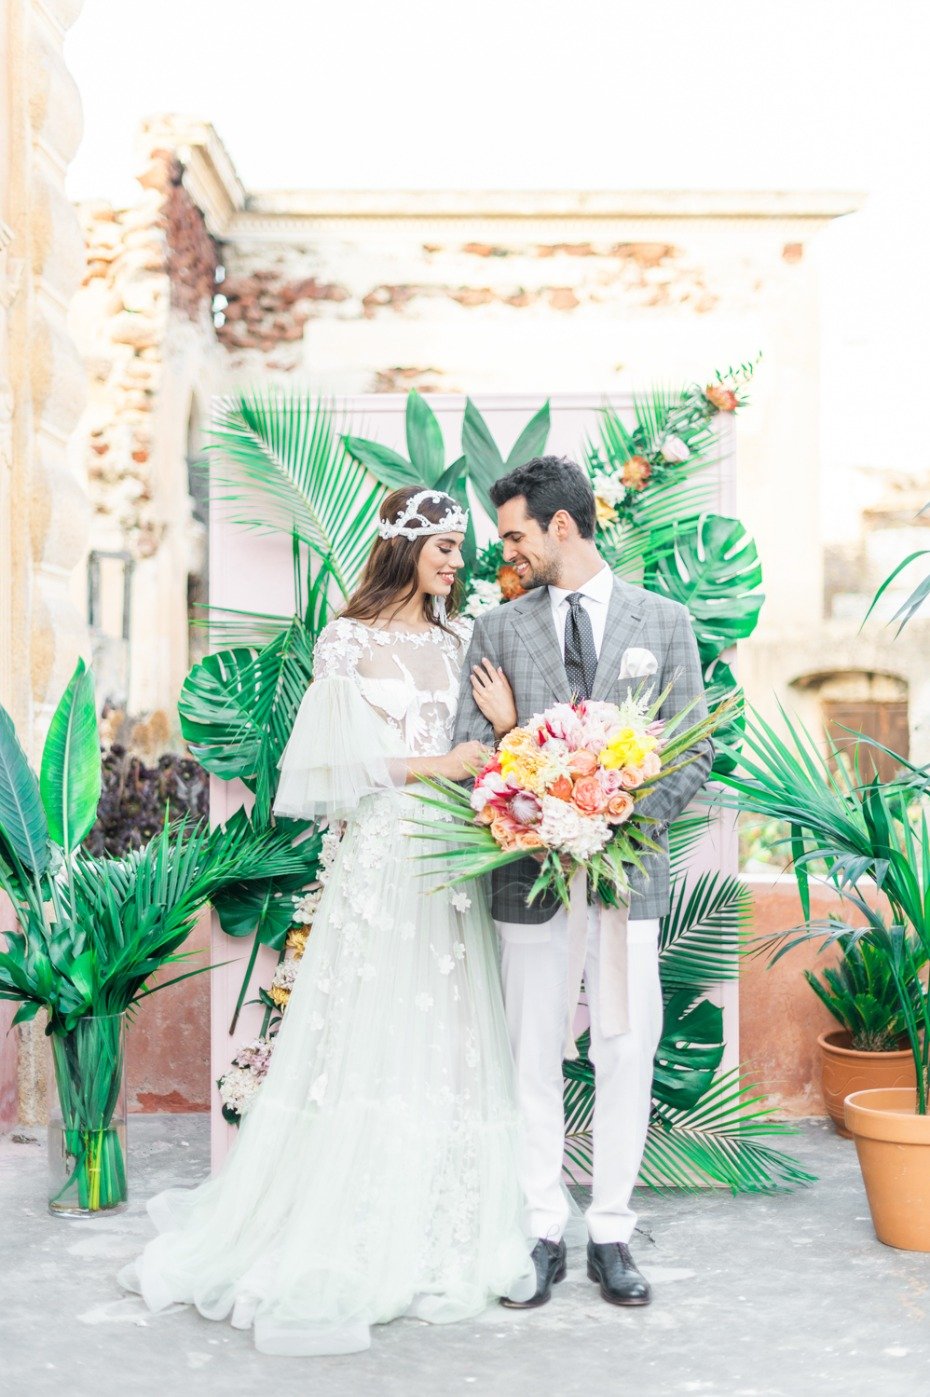 Tropical boho wedding ideas from Greece